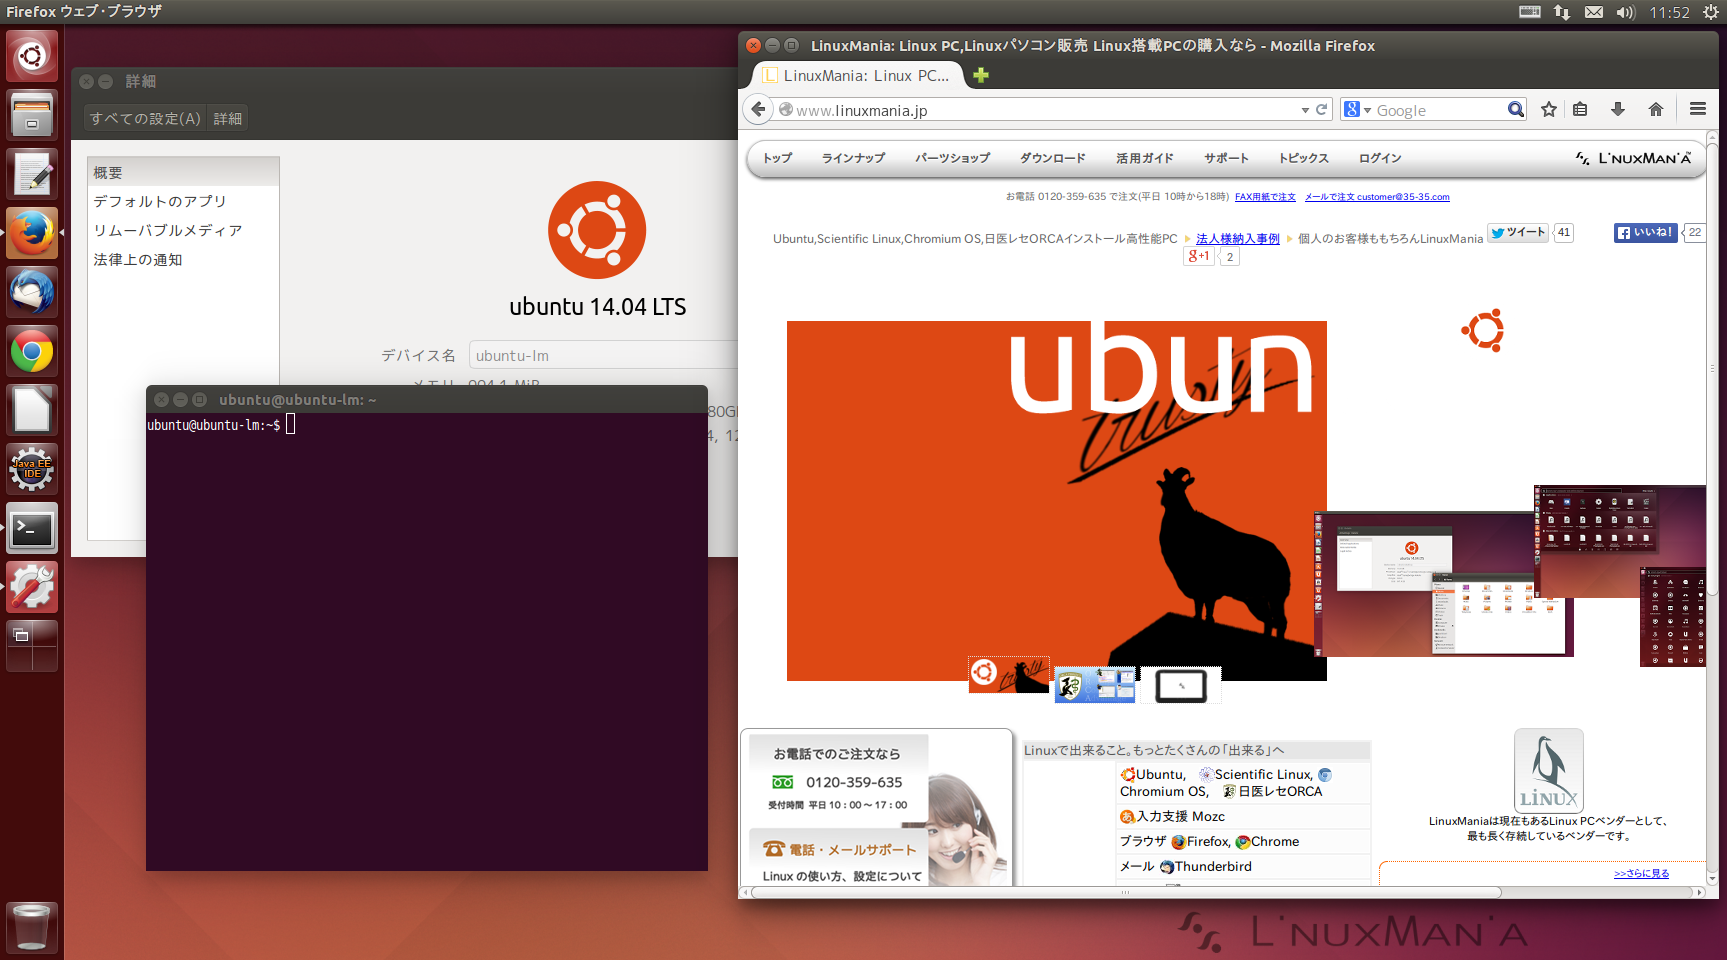 Ubuntu 14.04 をリリースいたしました。